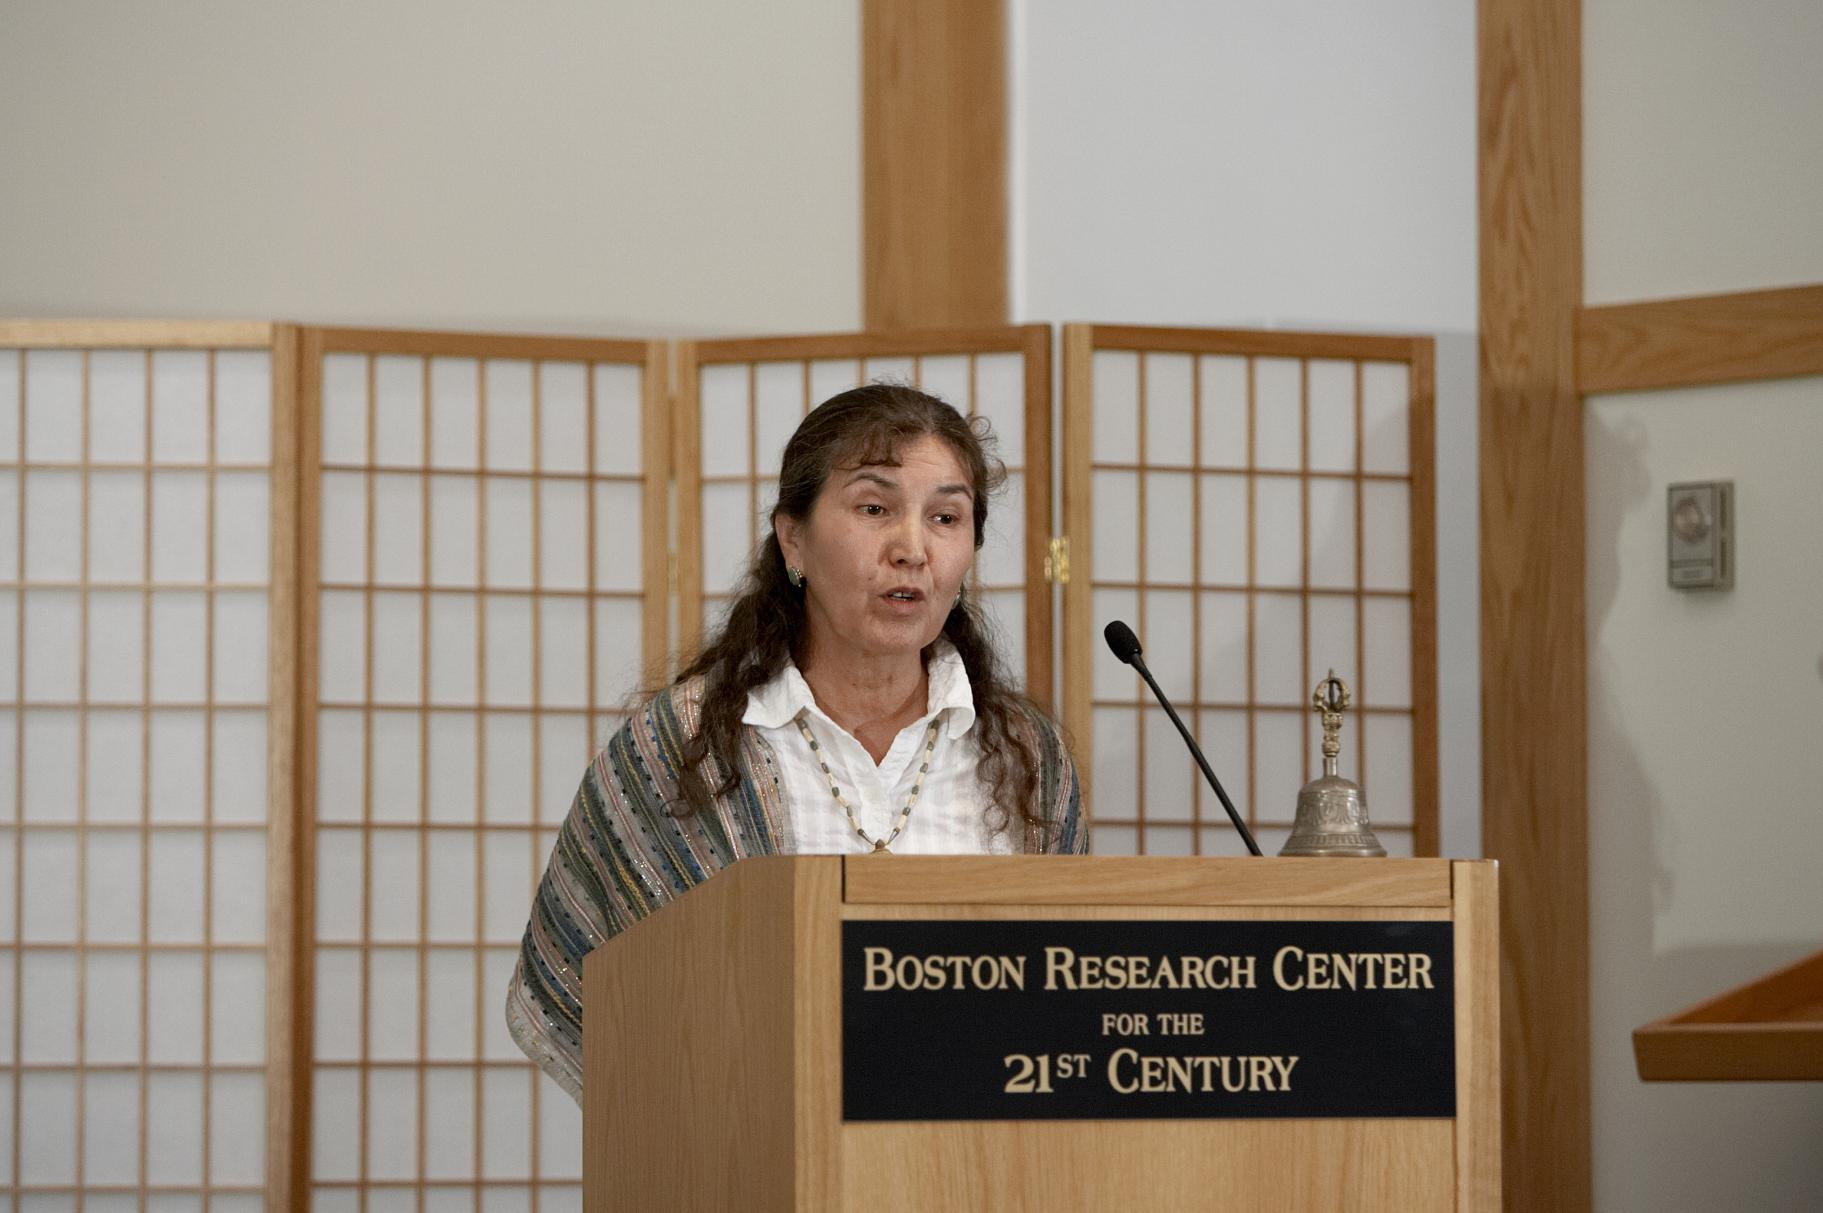 2006 Ikeda Forum speaker Jeanette Armstrong speaks at the podium